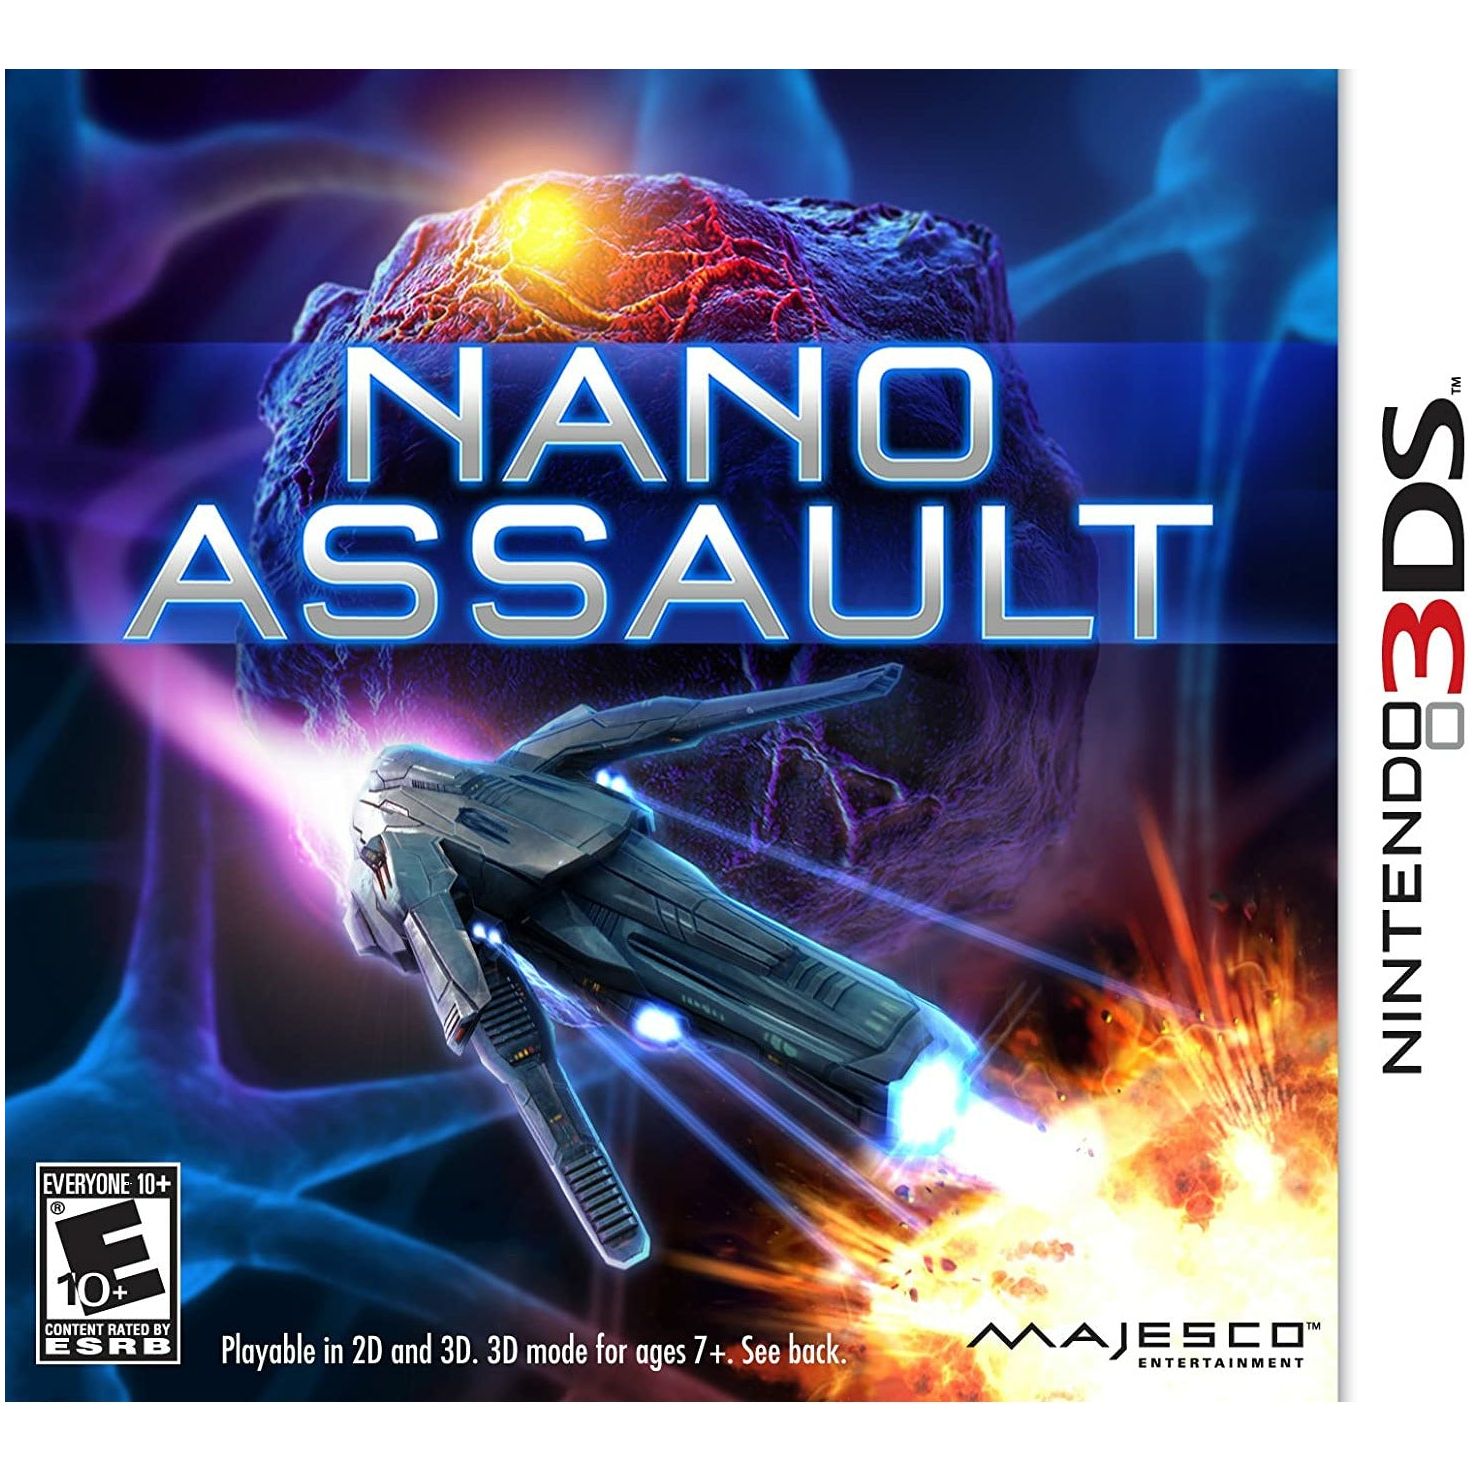 3DS - Nano Assault (Printed Cover Art)